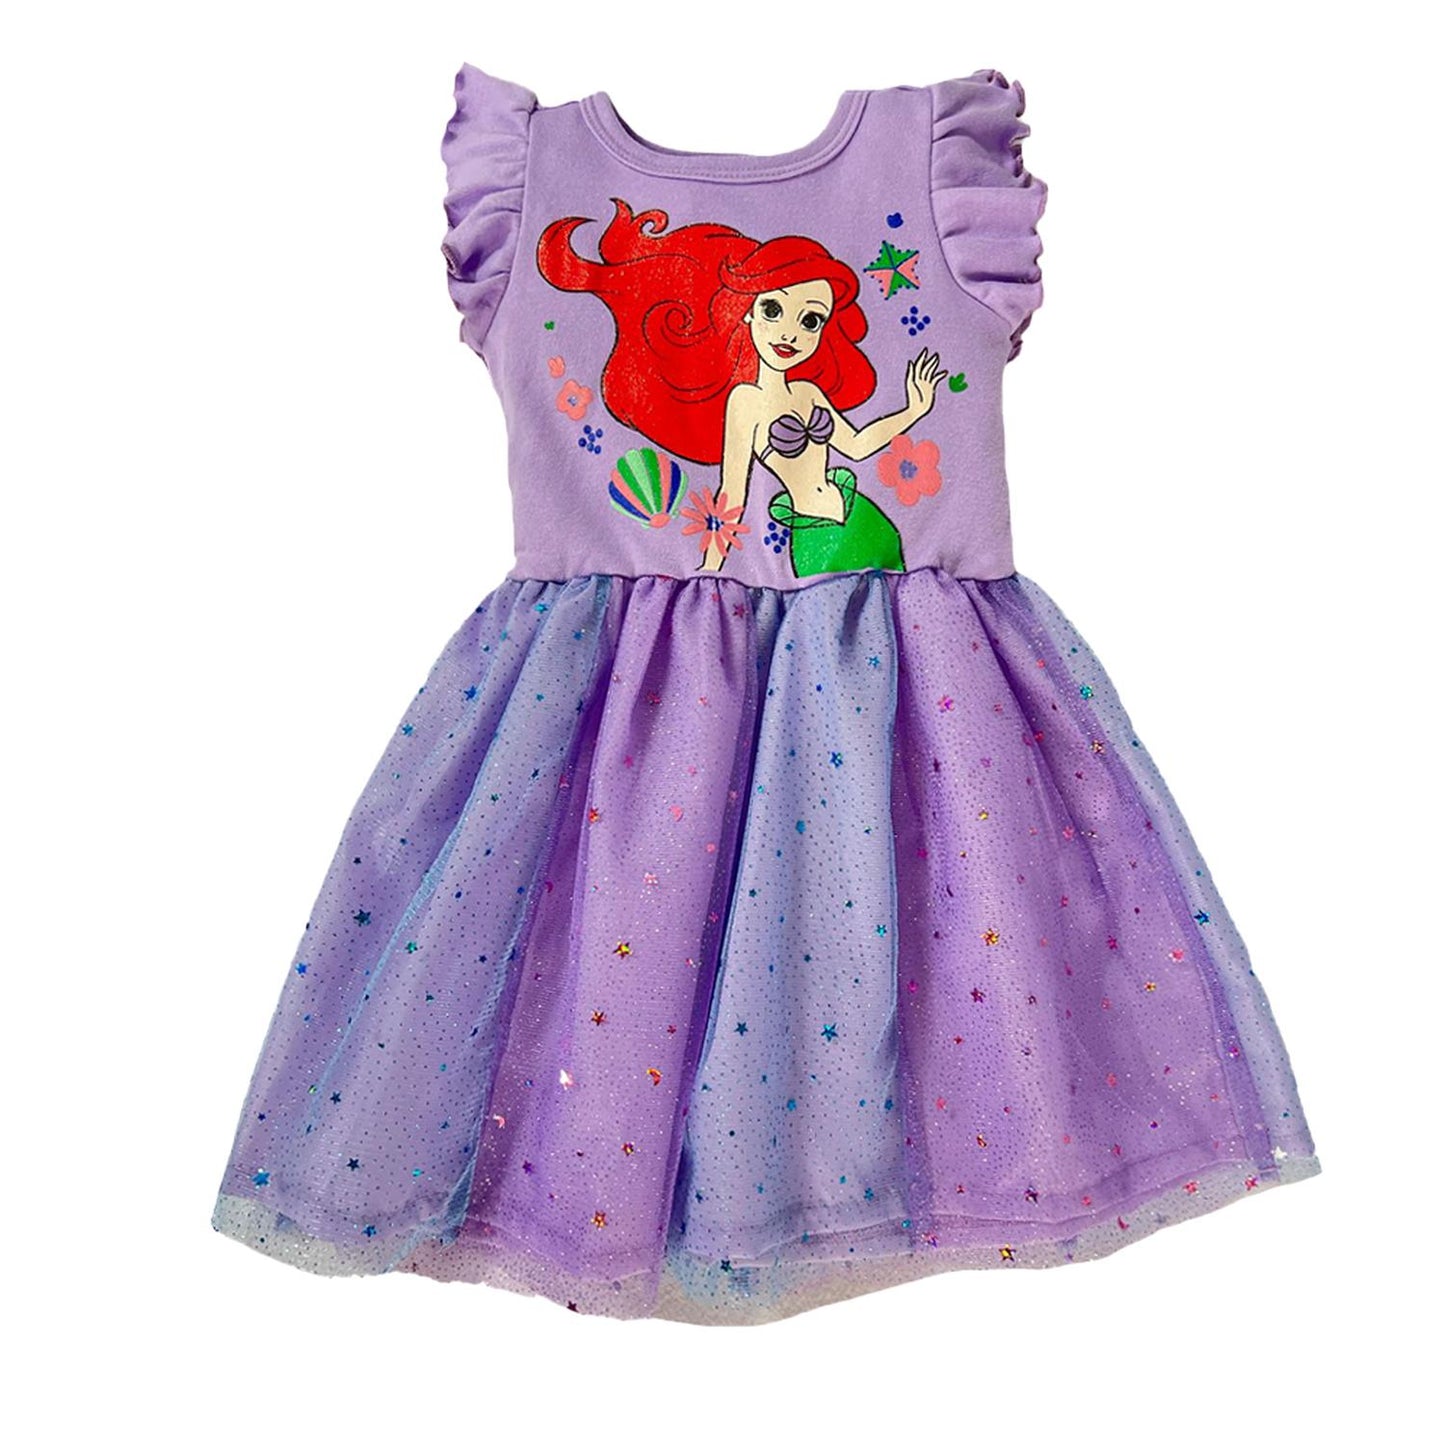 Kit 3 Vestidos Princesas Disney Cenicienta, Ariel, Bella